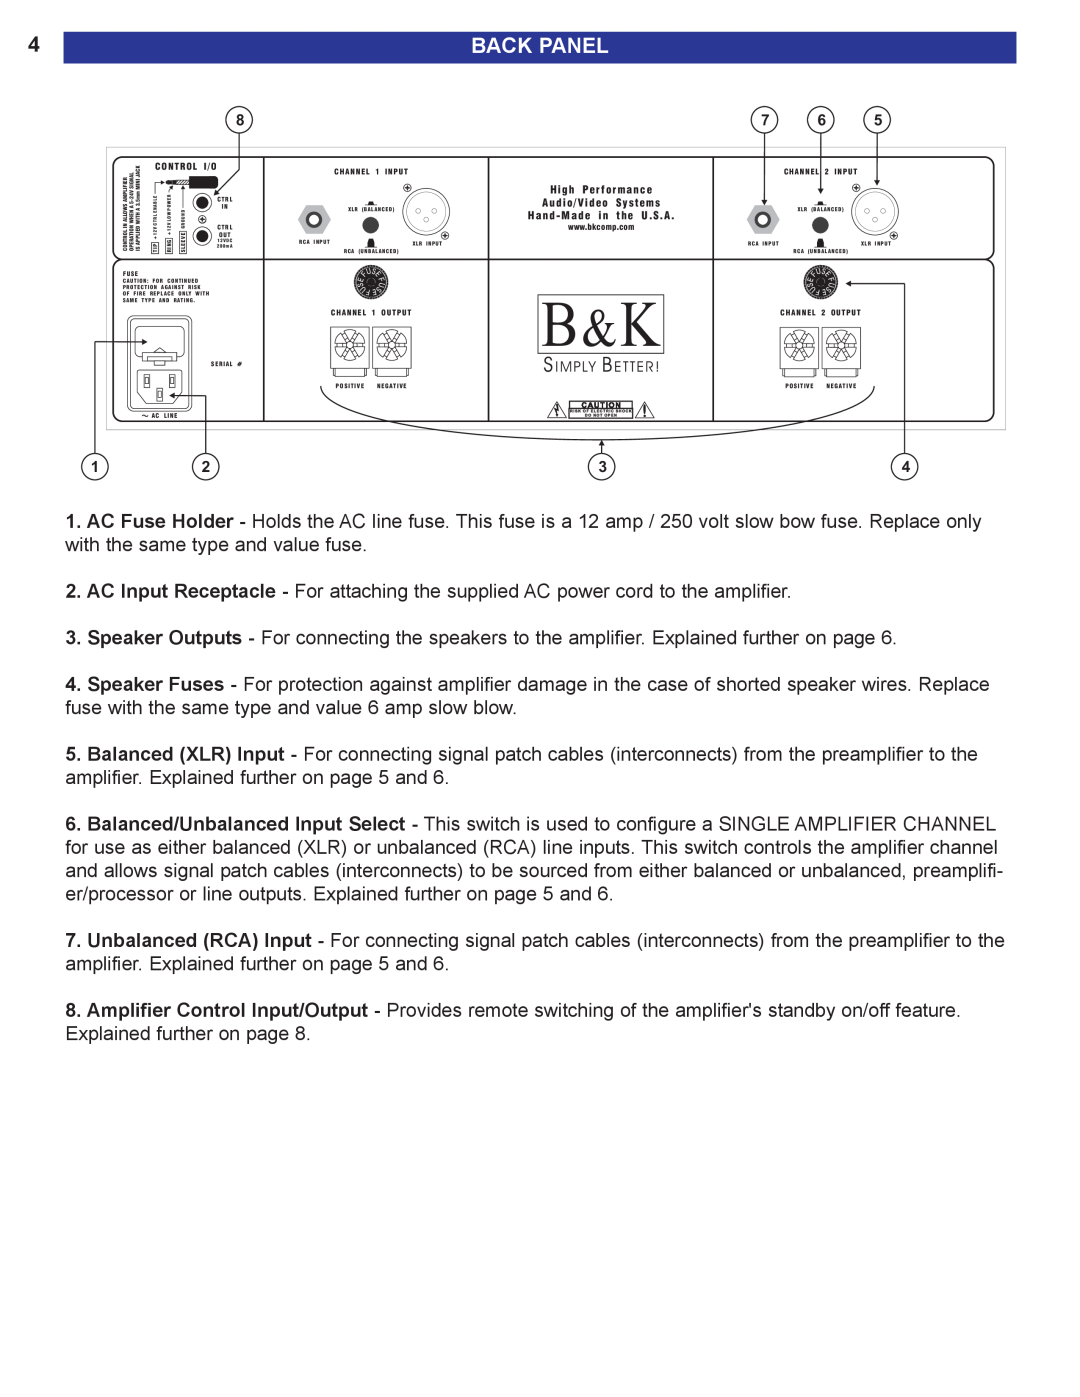 B&K 200.1 S2, 200.2 S2 user manual Back Panel 